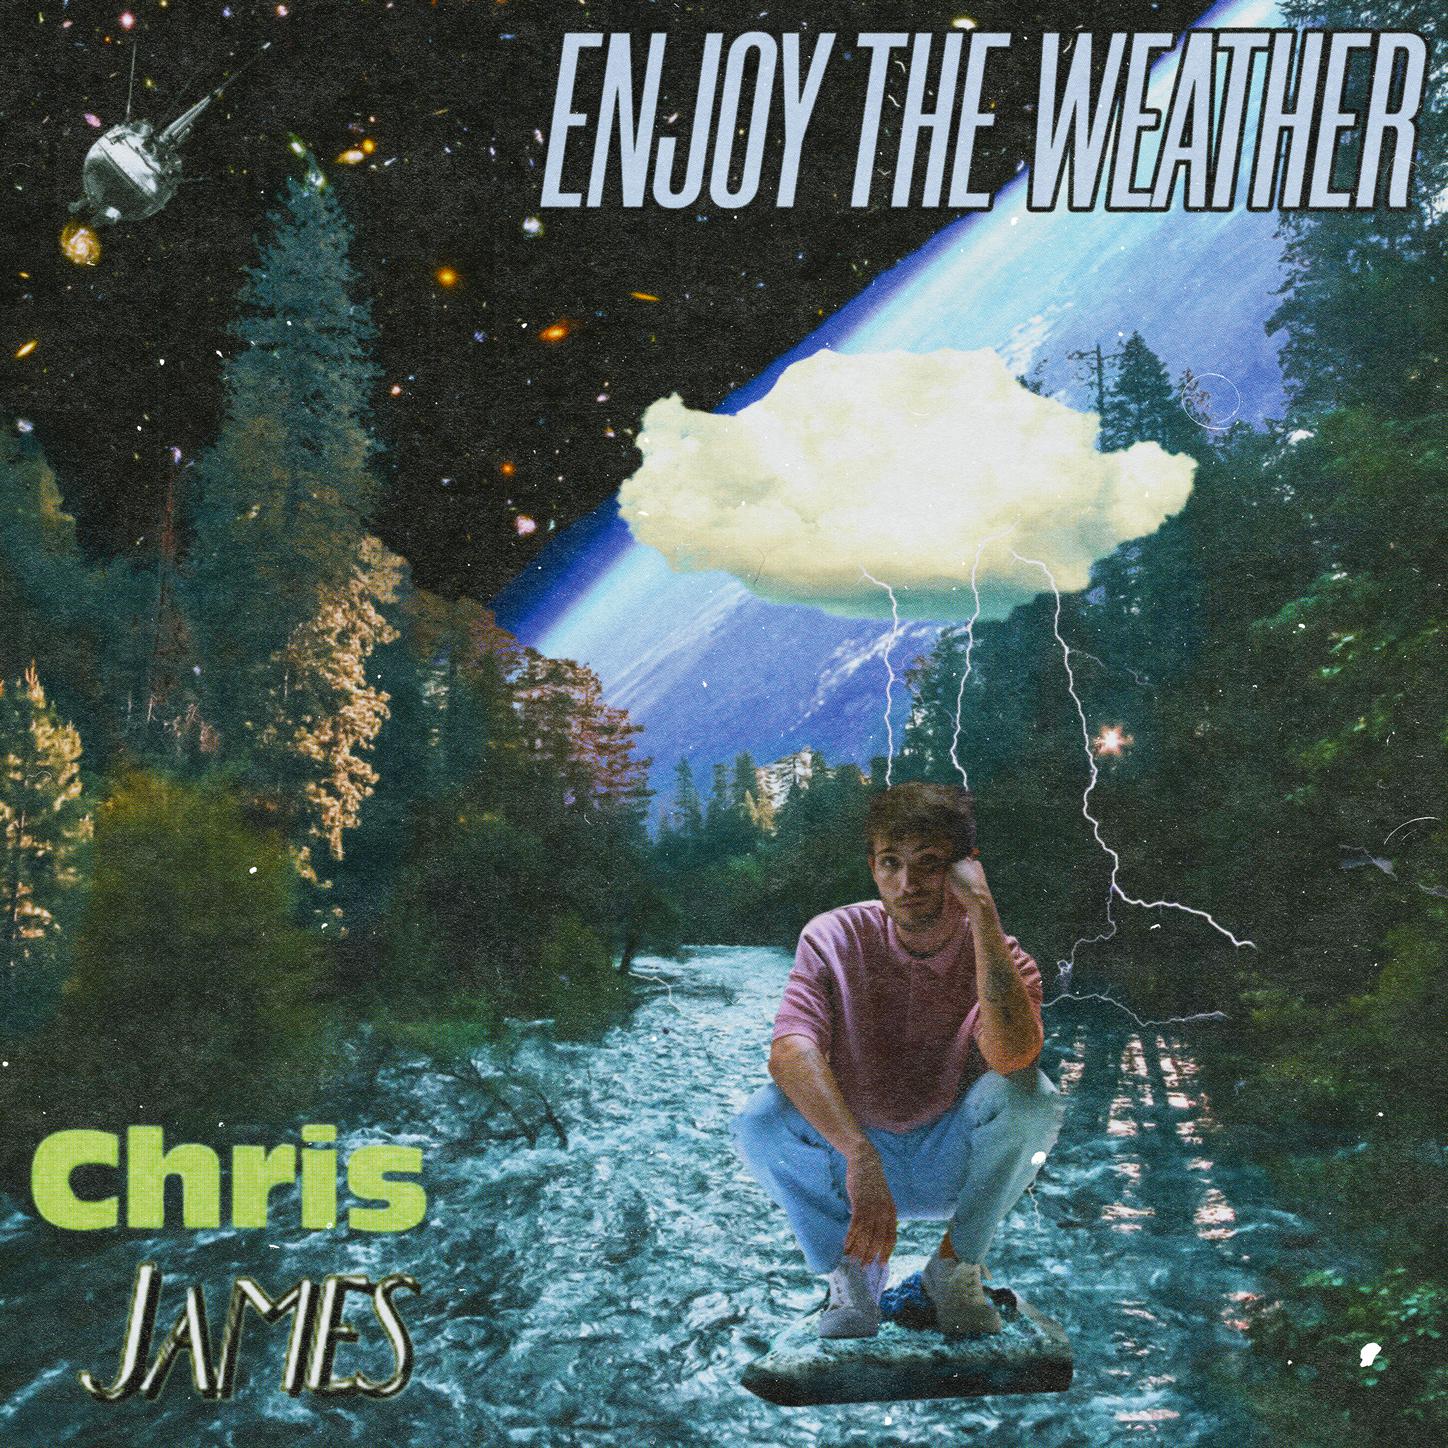 Enjoy The Weather歌词 歌手Chris James-专辑Enjoy The Weather-单曲《Enjoy The Weather》LRC歌词下载